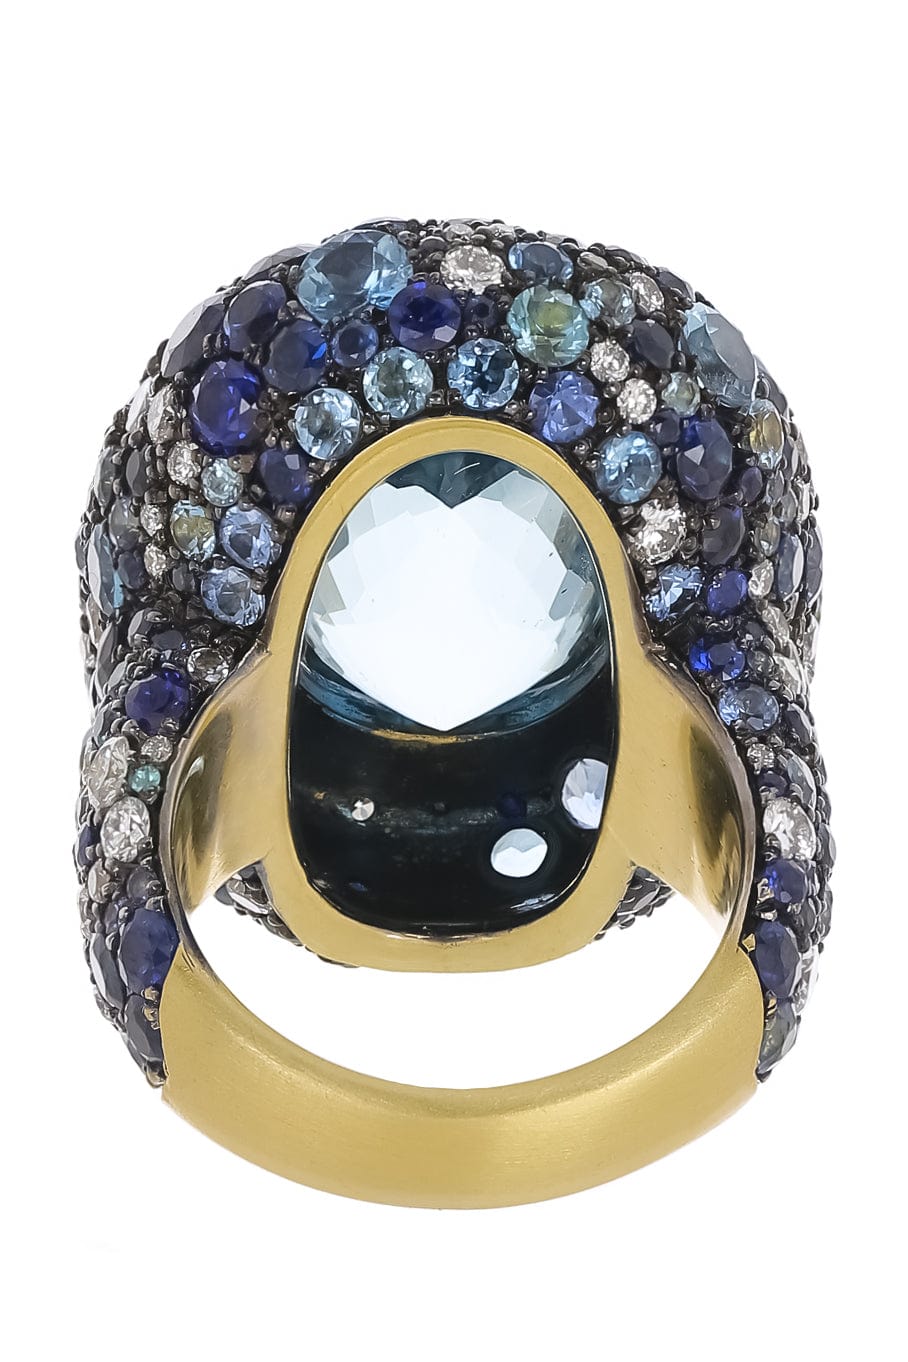 JARED LEHR-Aquamarine and Multi Stone Ring-YELLOW GOLD